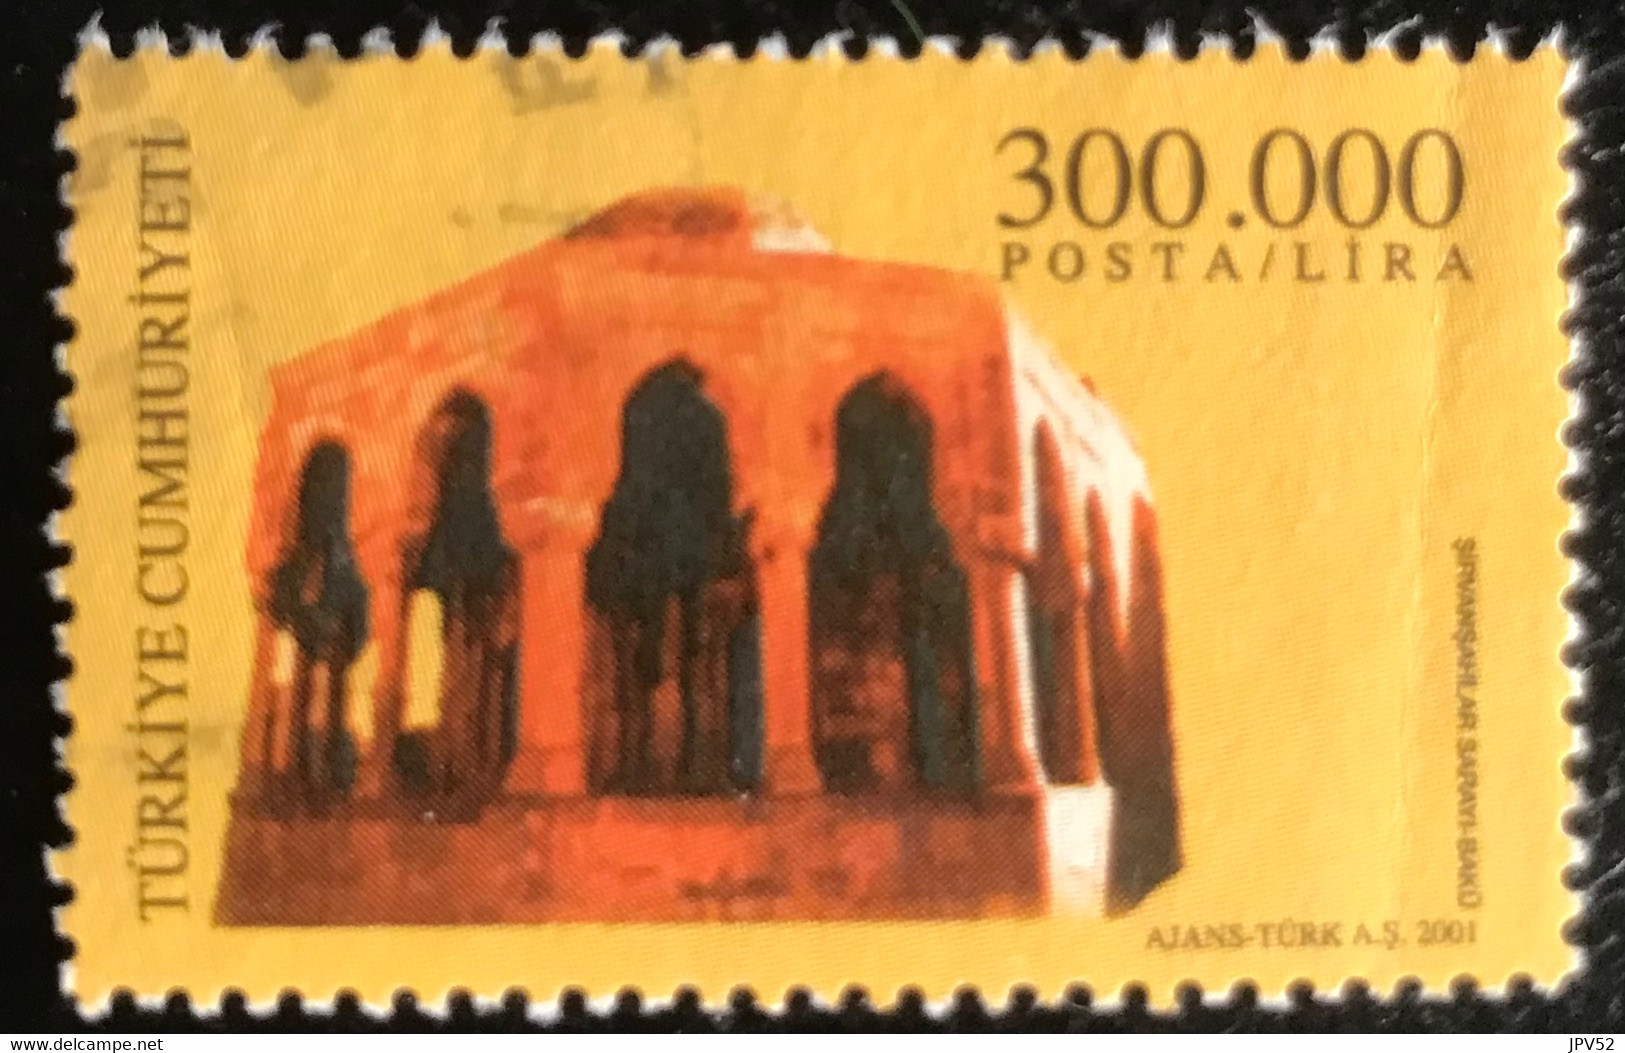 Türkiye Cumhuriyeti - 11/24 - (°)used - 2001 - Michel 3289 - Cultureel Erfgoed - Gebraucht